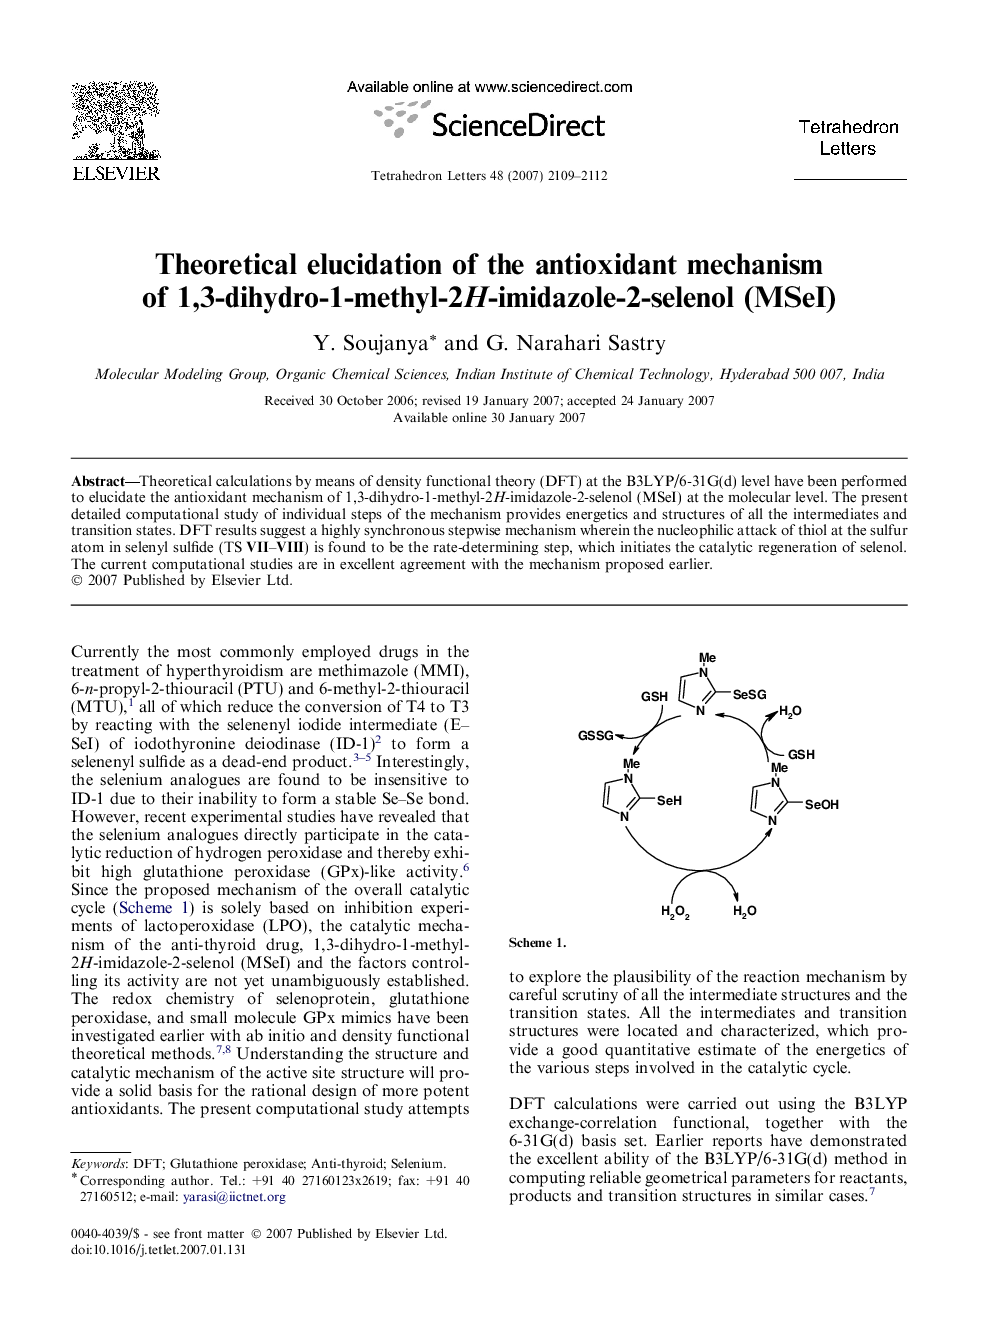 Theoretical elucidation of the antioxidant mechanism of 1,3-dihydro-1-methyl-2H-imidazole-2-selenol (MSeI)